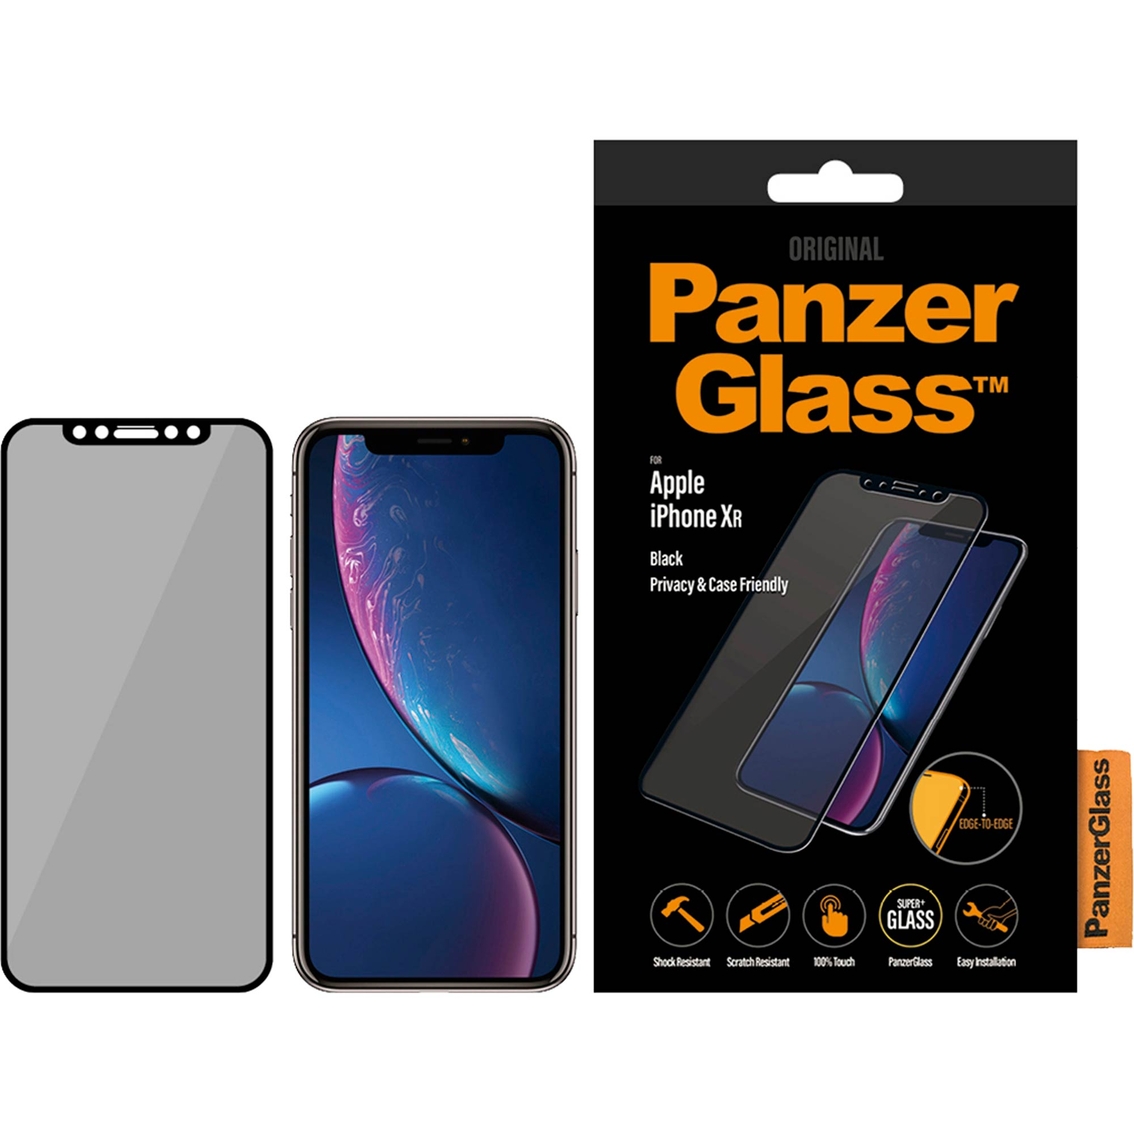 Panzerglass 2665, protector de pantalla,, apple, iphone xr iphone 6.1 2019,  resistente a rayones, a prueba de roturas, resisten